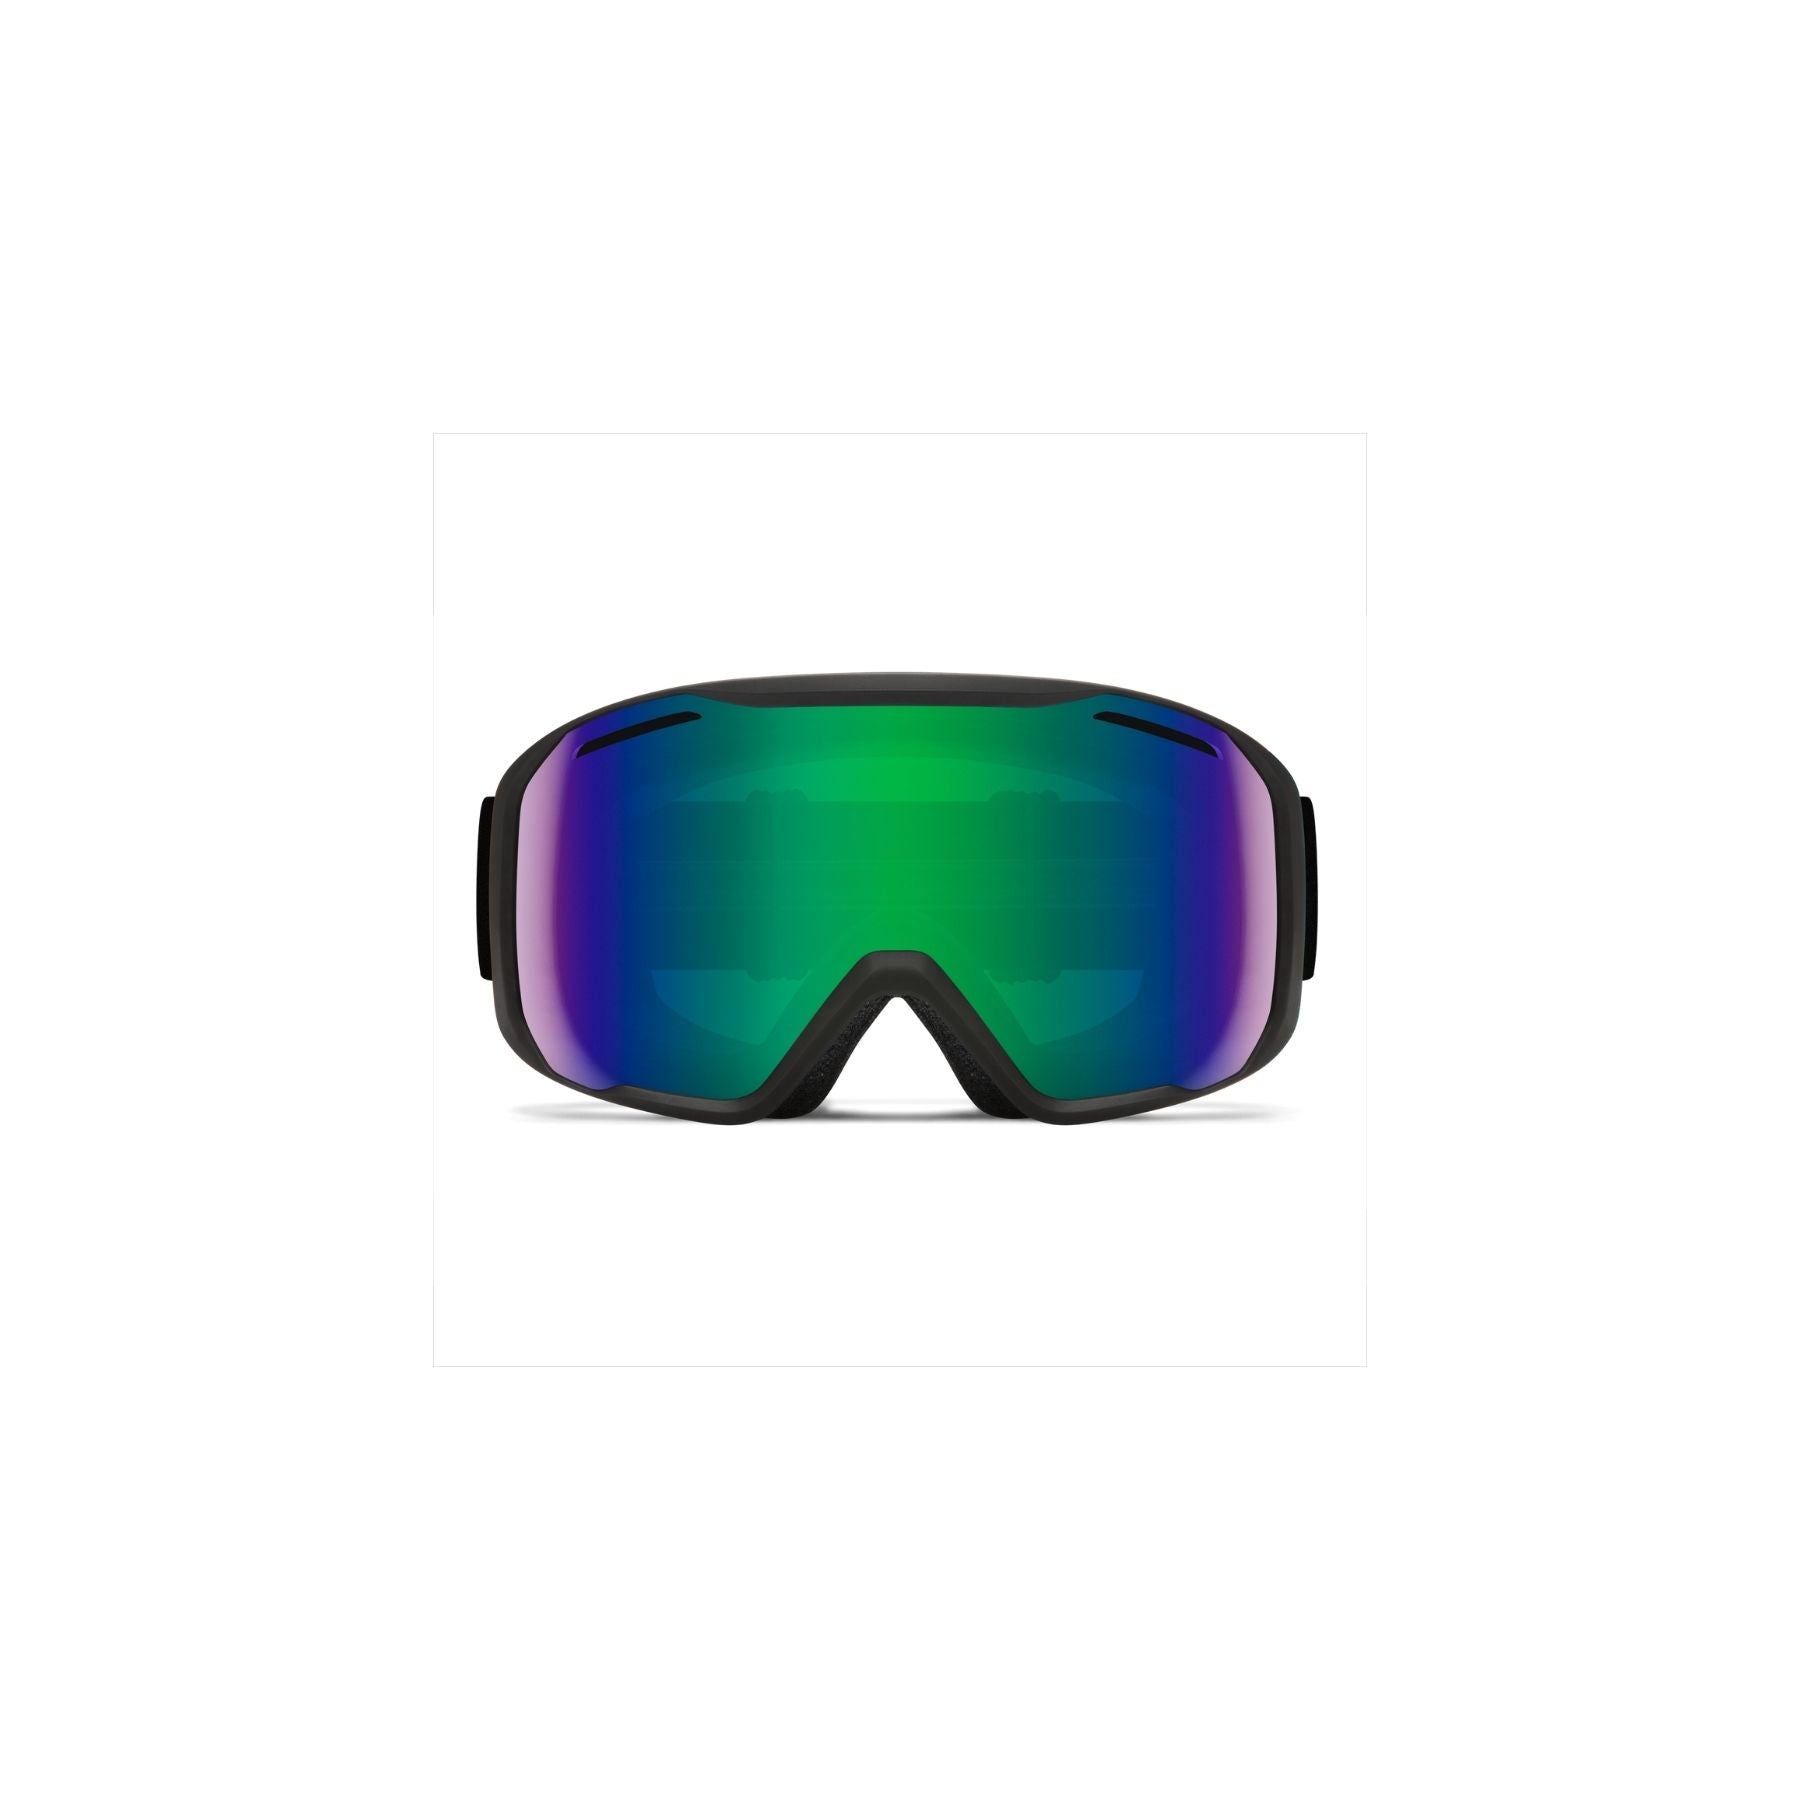 Smith Blazer Goggles in Black Green